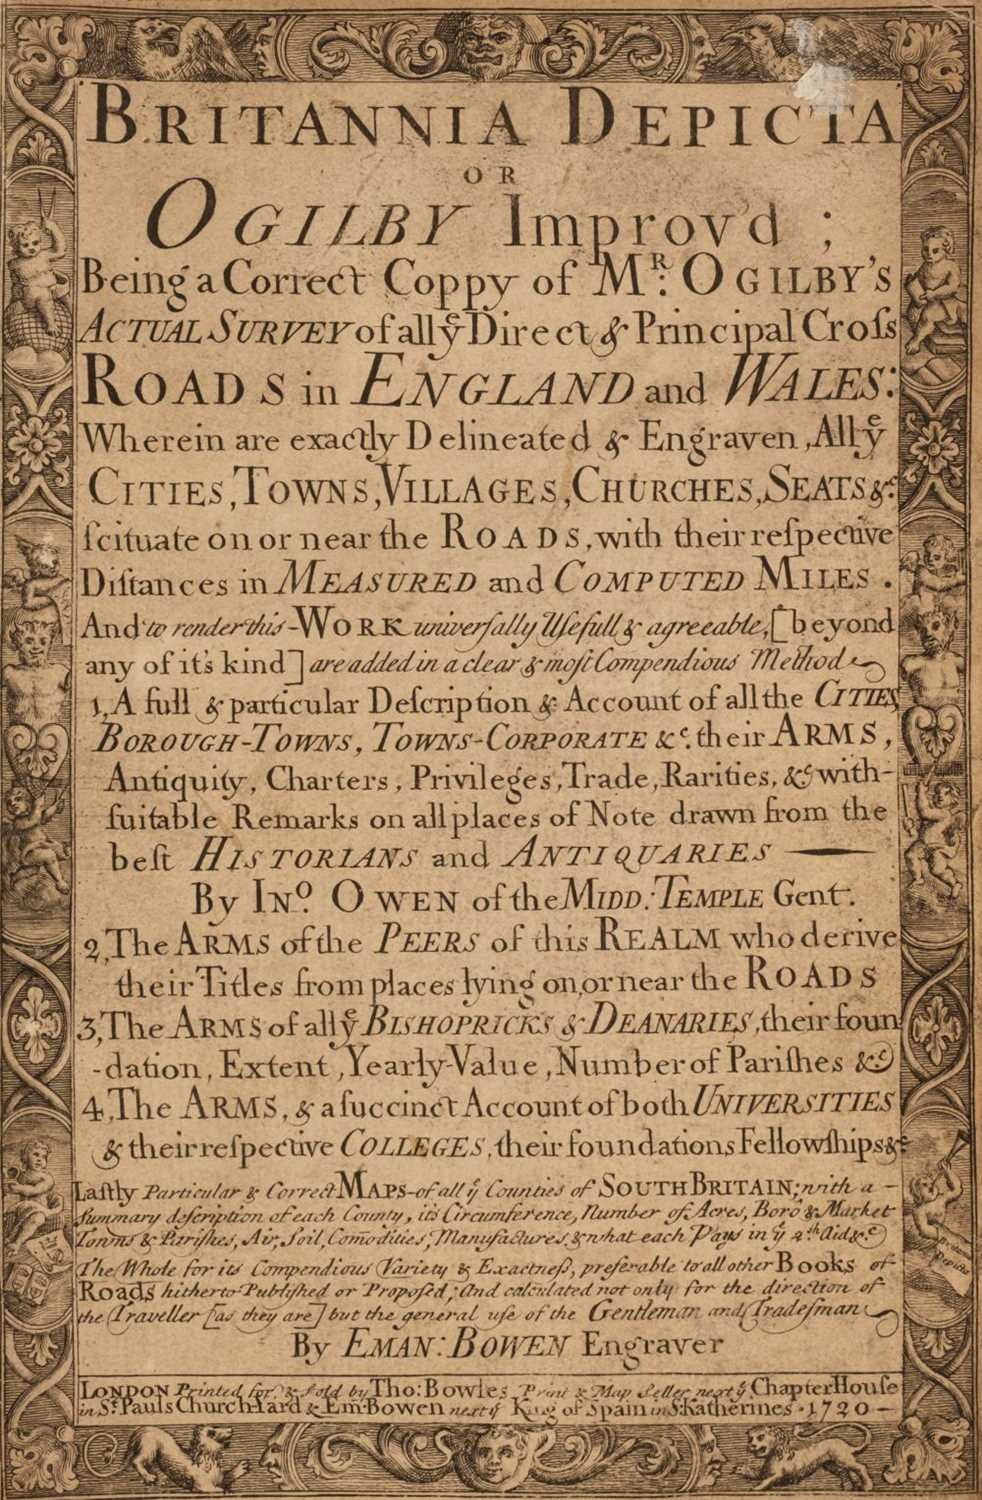 Lot 104 - Owen (John & Bowen Emanuel). Britannia Depicta or Ogilby Improv'd, 1720